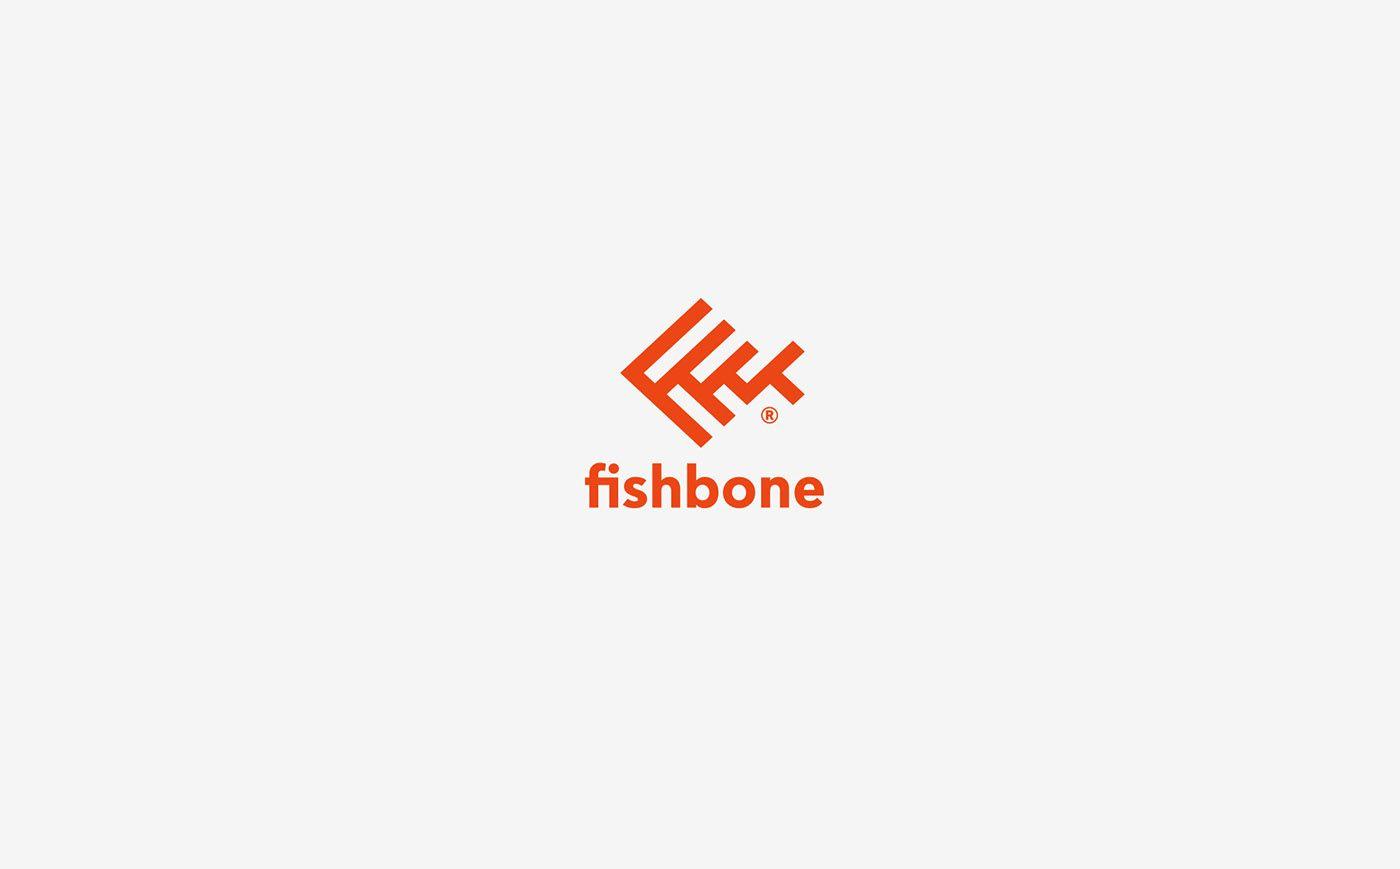 Fishbone Logo - Fishbone Logo & Identity Design on Behance